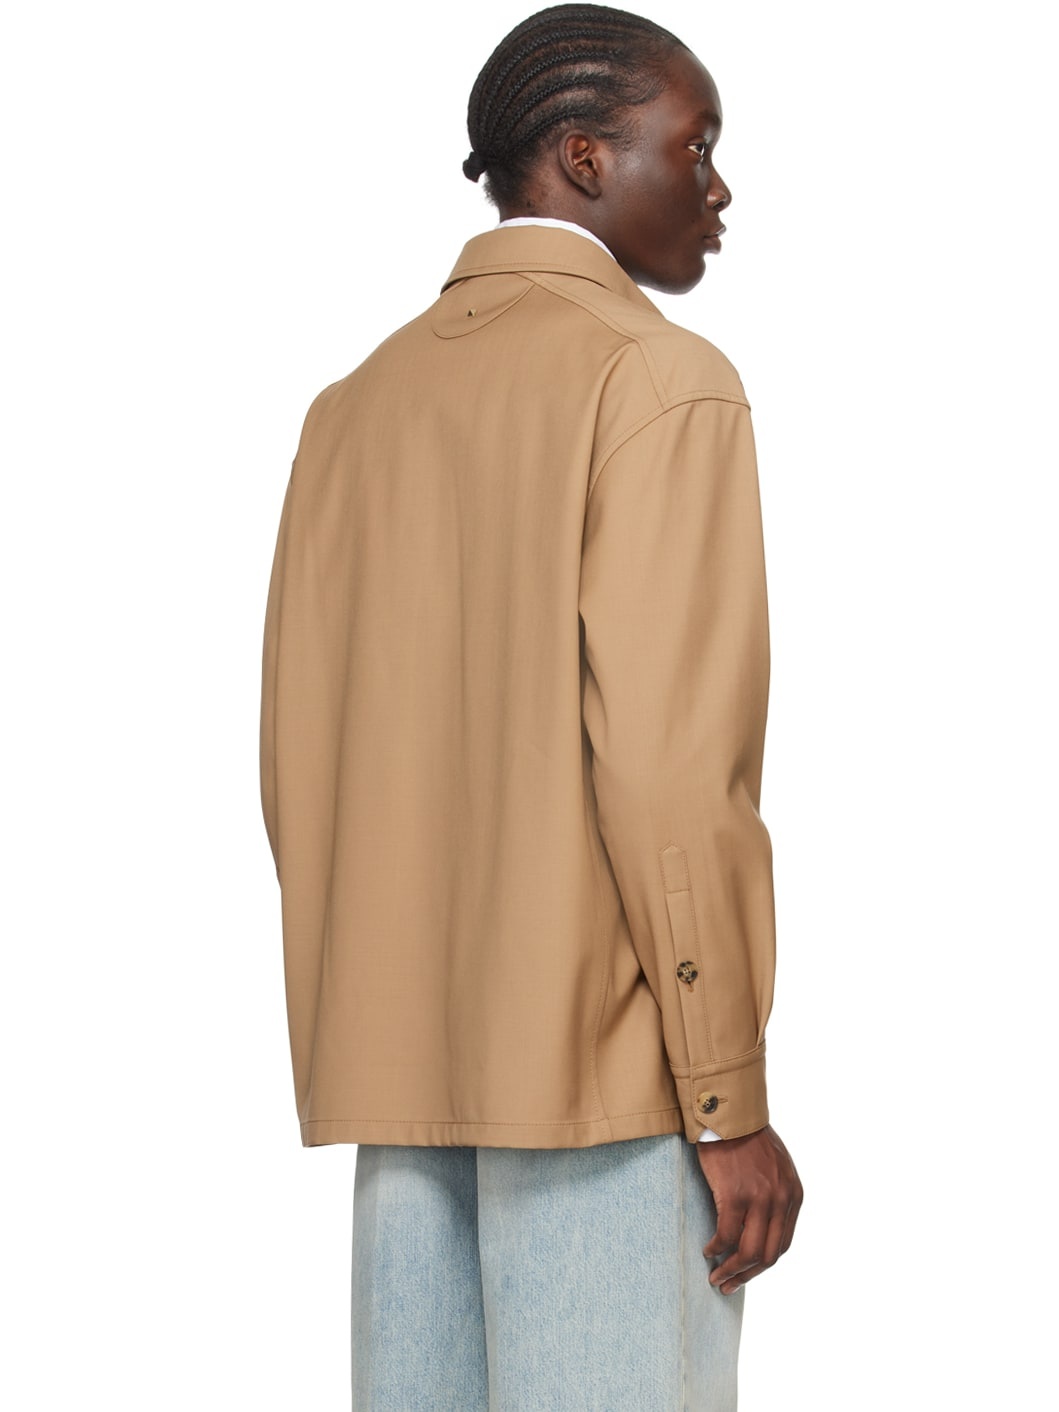 Beige Spread Collar Jacket - 3